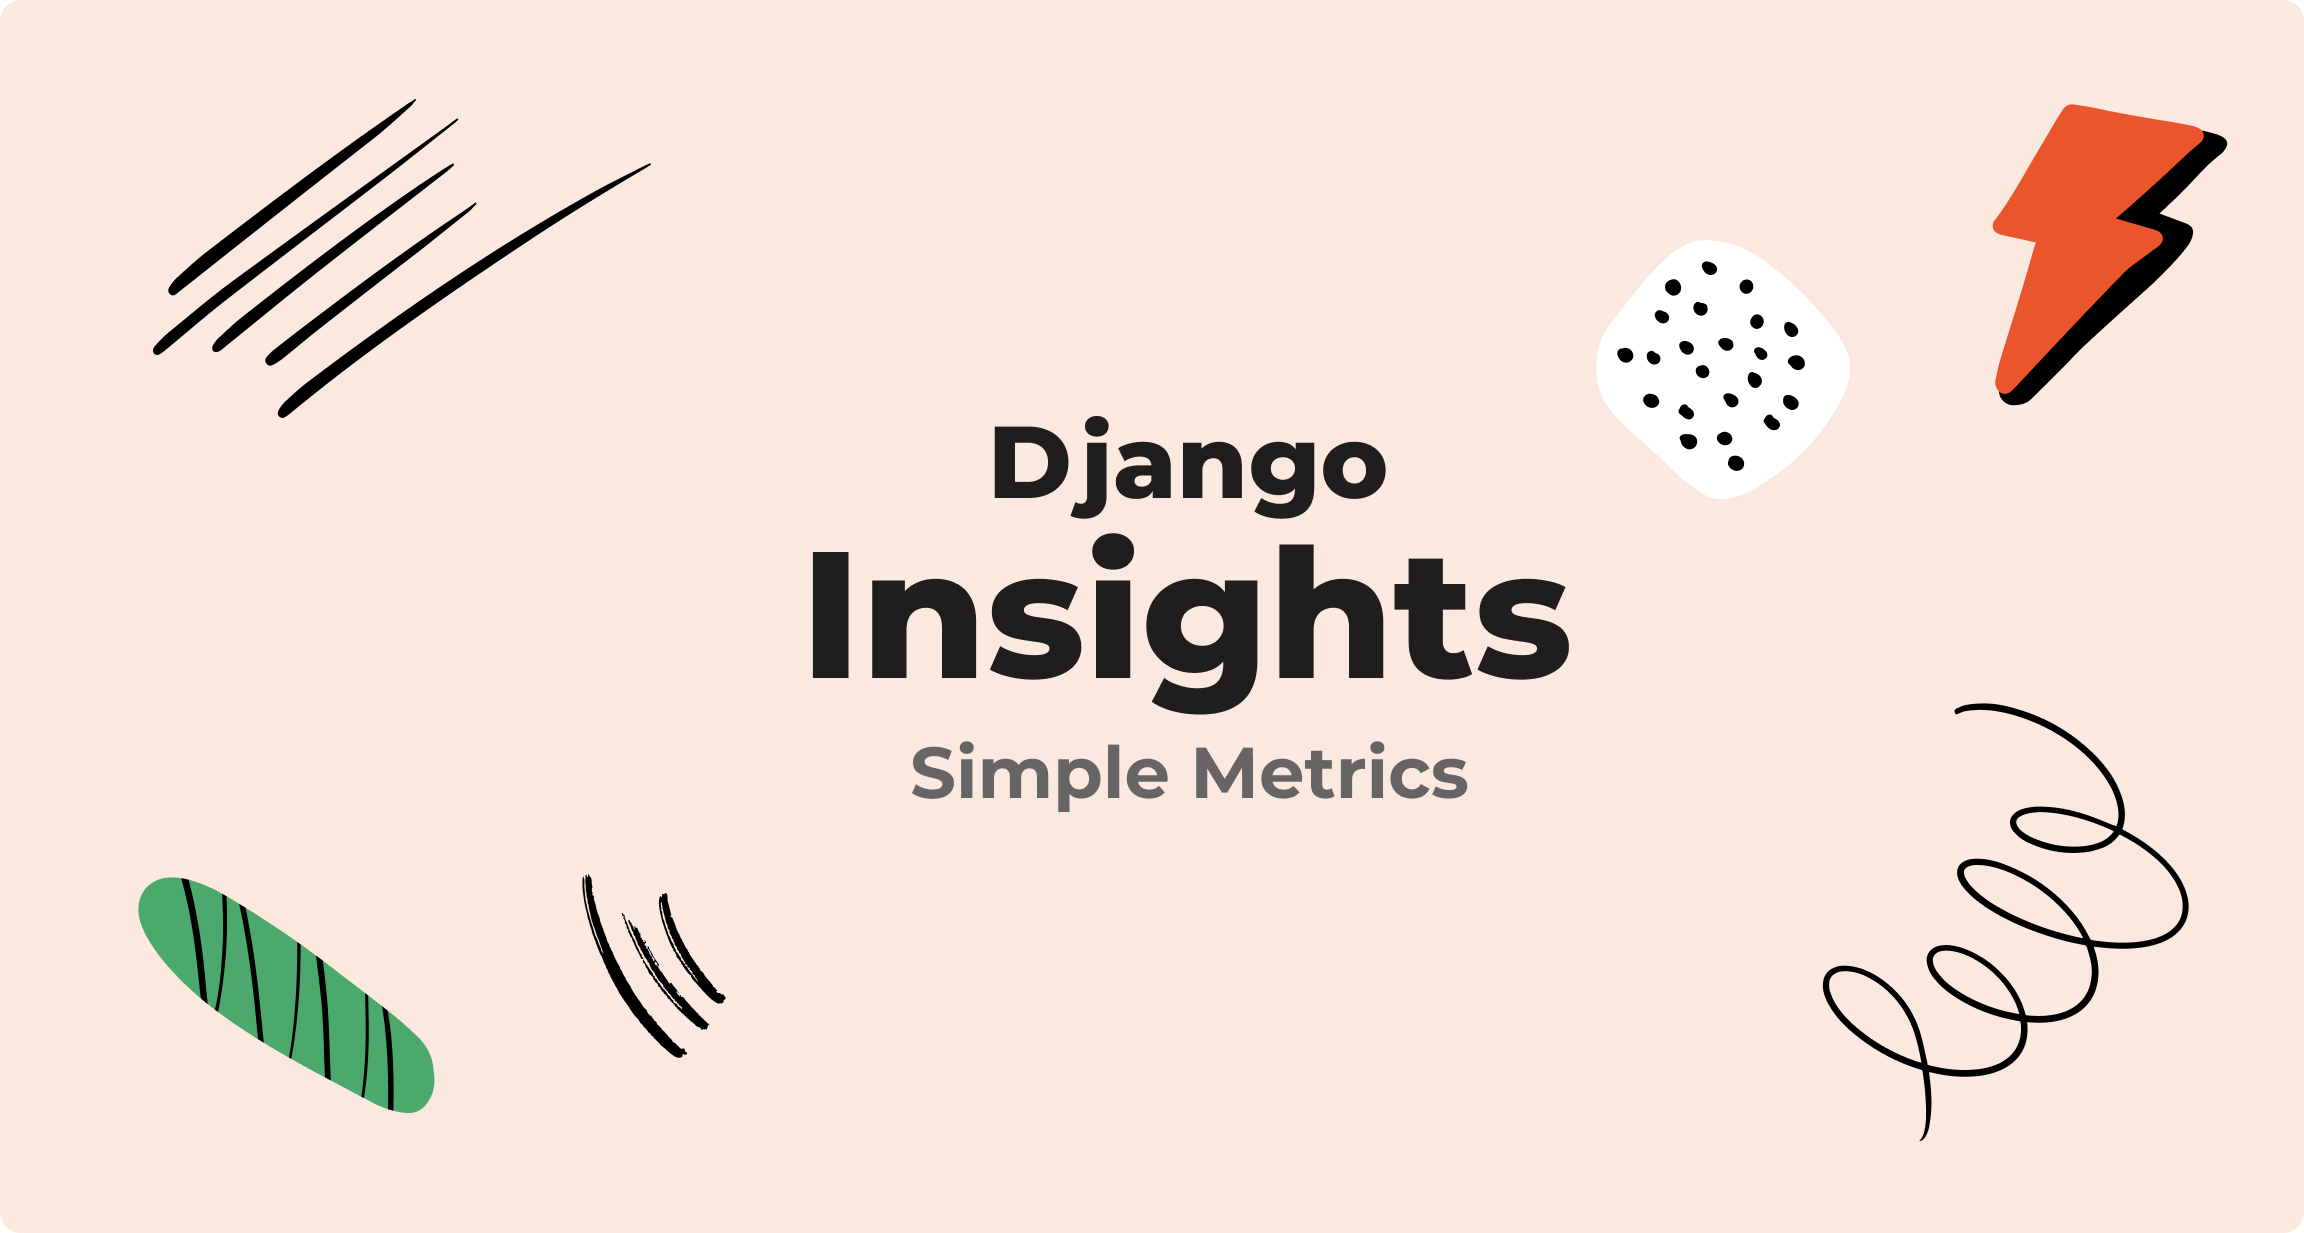 "Django Insights"